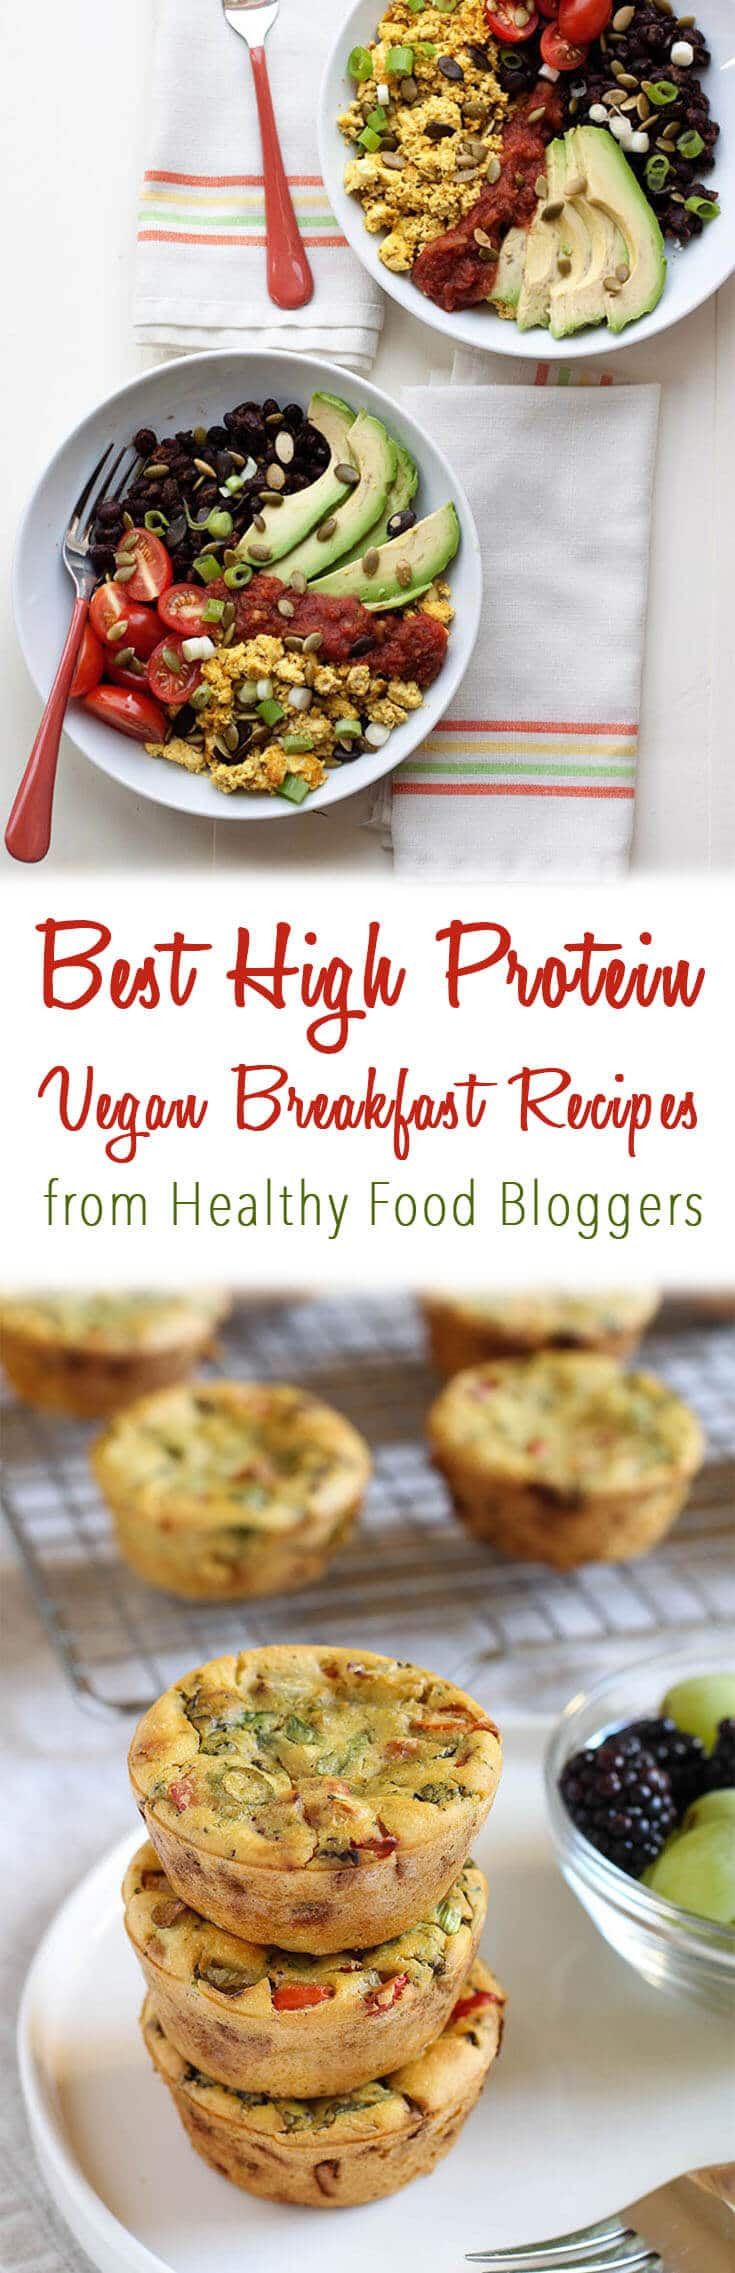 Best Vegan Brunch Recipes
 Best High Protein Vegan Breakfast Recipes from Healthy